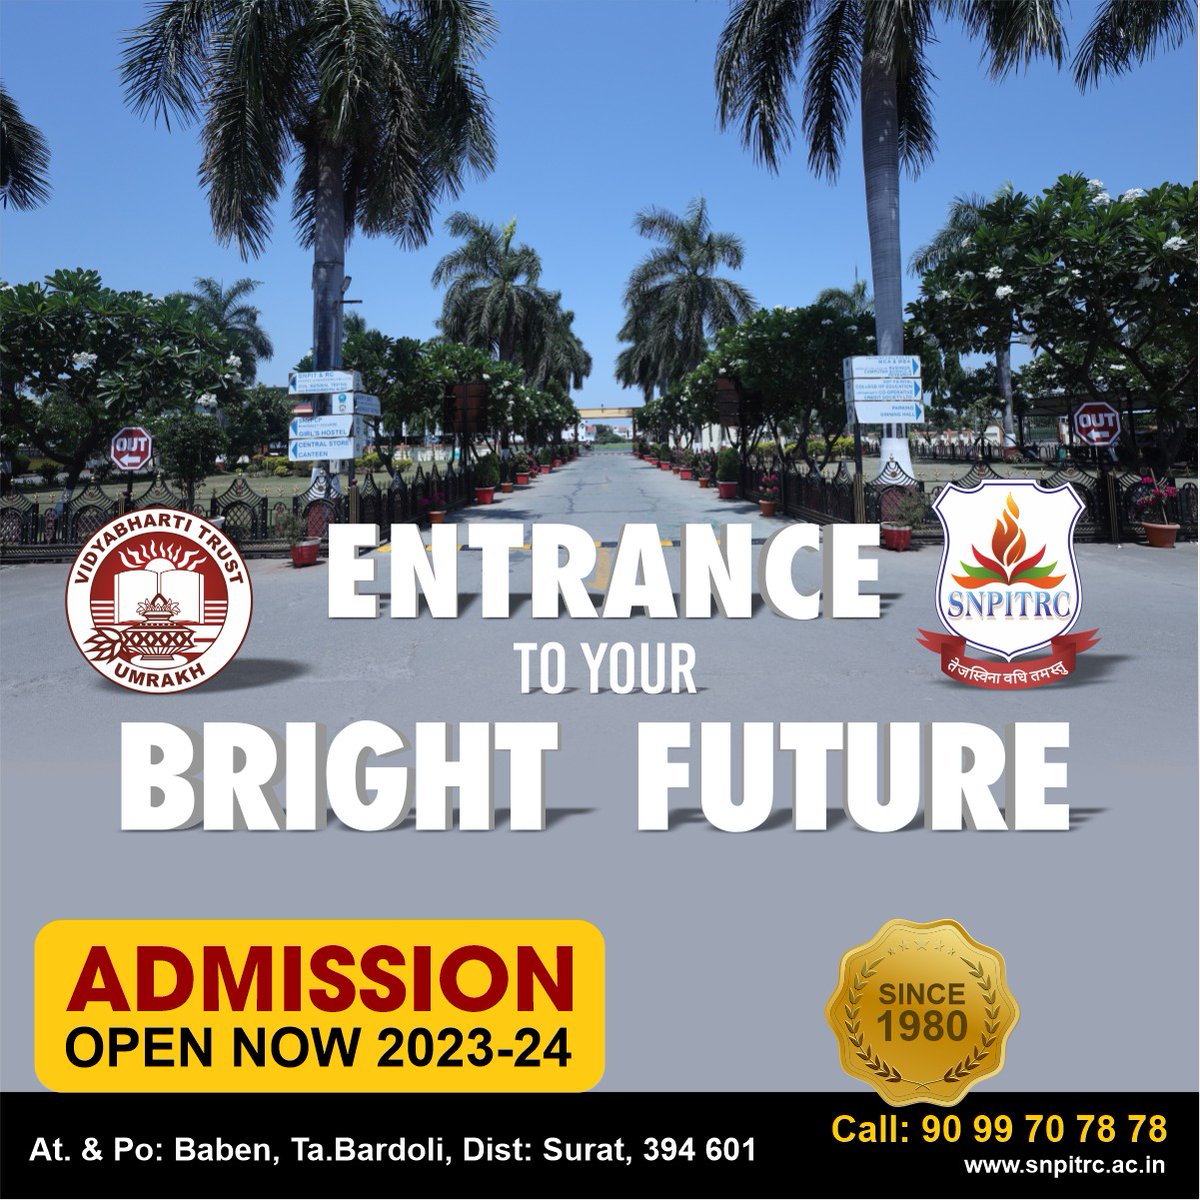 Entrance to your bright future.
...
#umrakh #baben #bardoli #vidhyabharti #surat #admissions #gtu #vnsgu #college #university #collegelife #education #student #school #students #studentlife #study #instagram #friends #motivation #engineering #sports  #like #follow #collegestudent